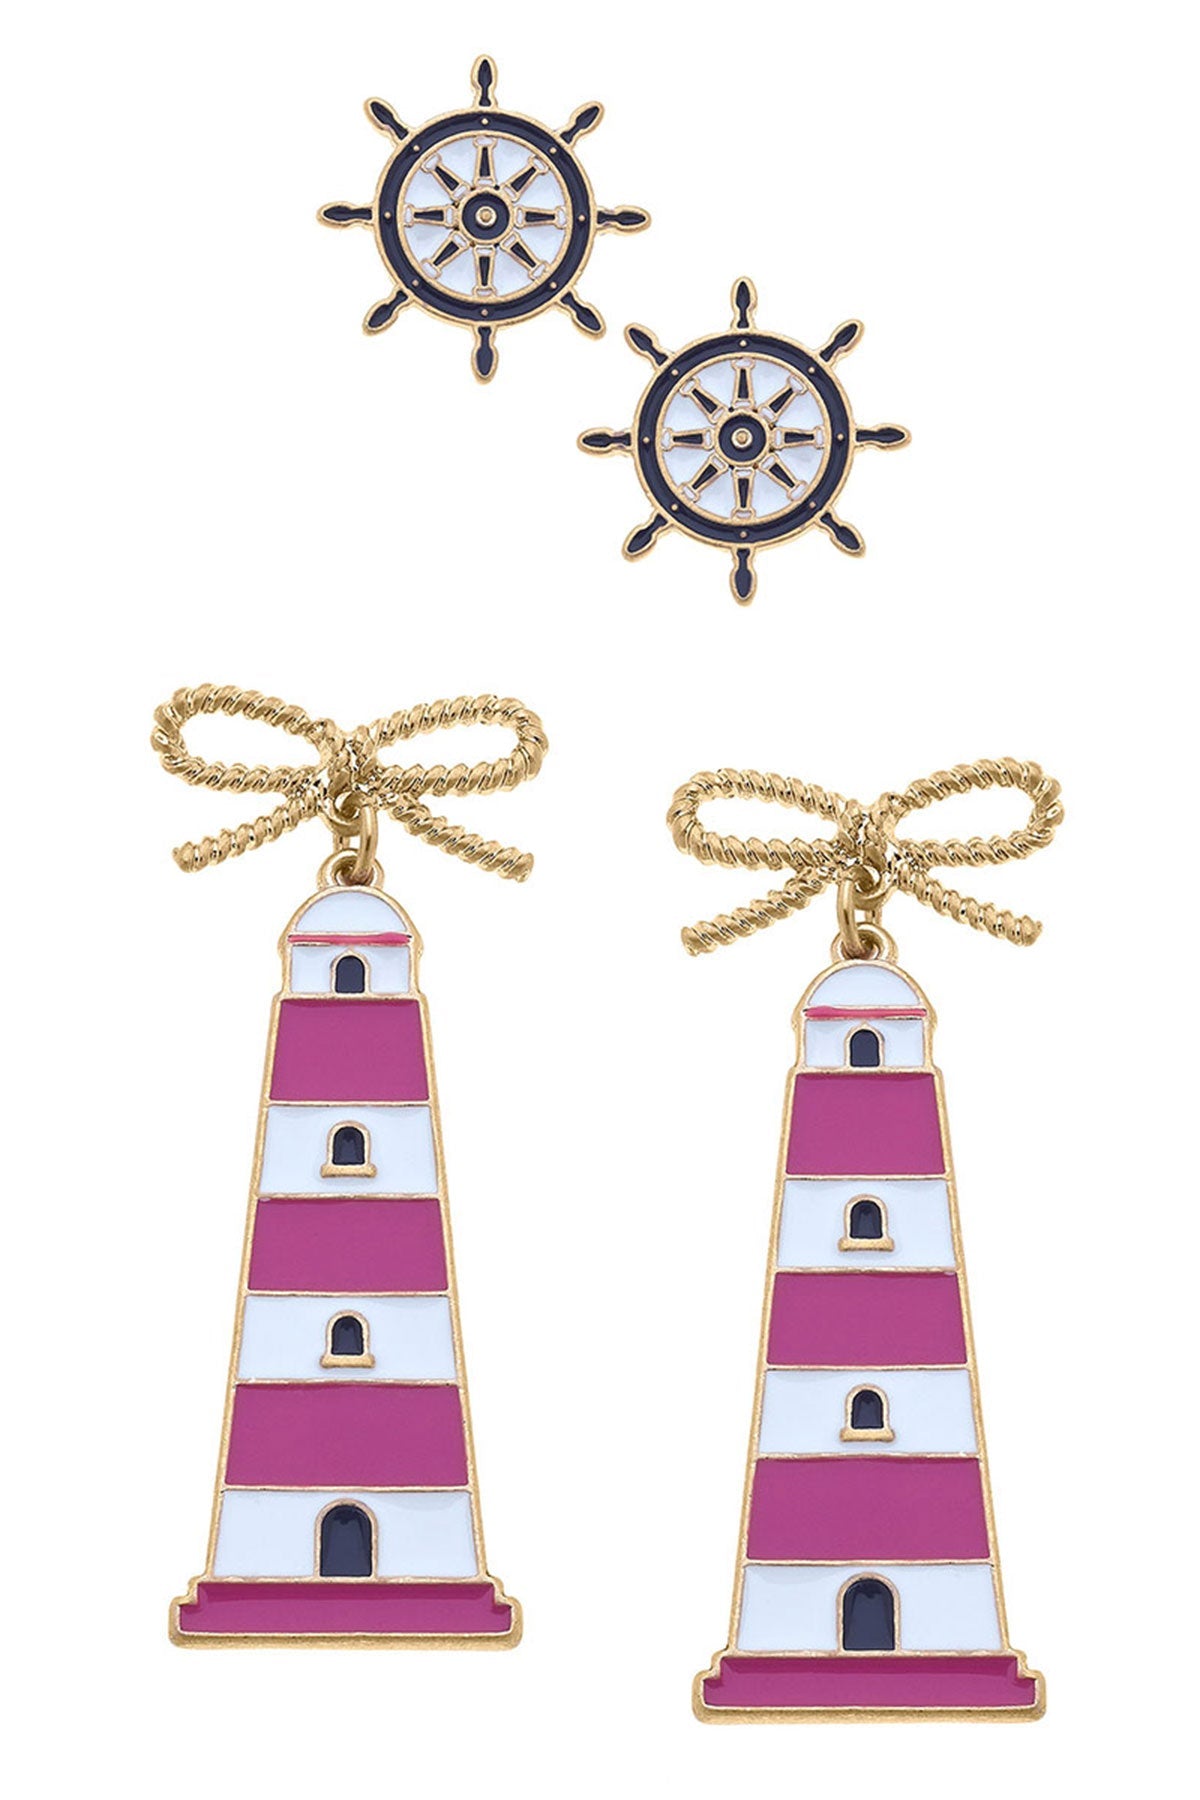 Bridget Navy Nautical Ship's Wheel Stud and Luna Pink Lighthouse Earring Set